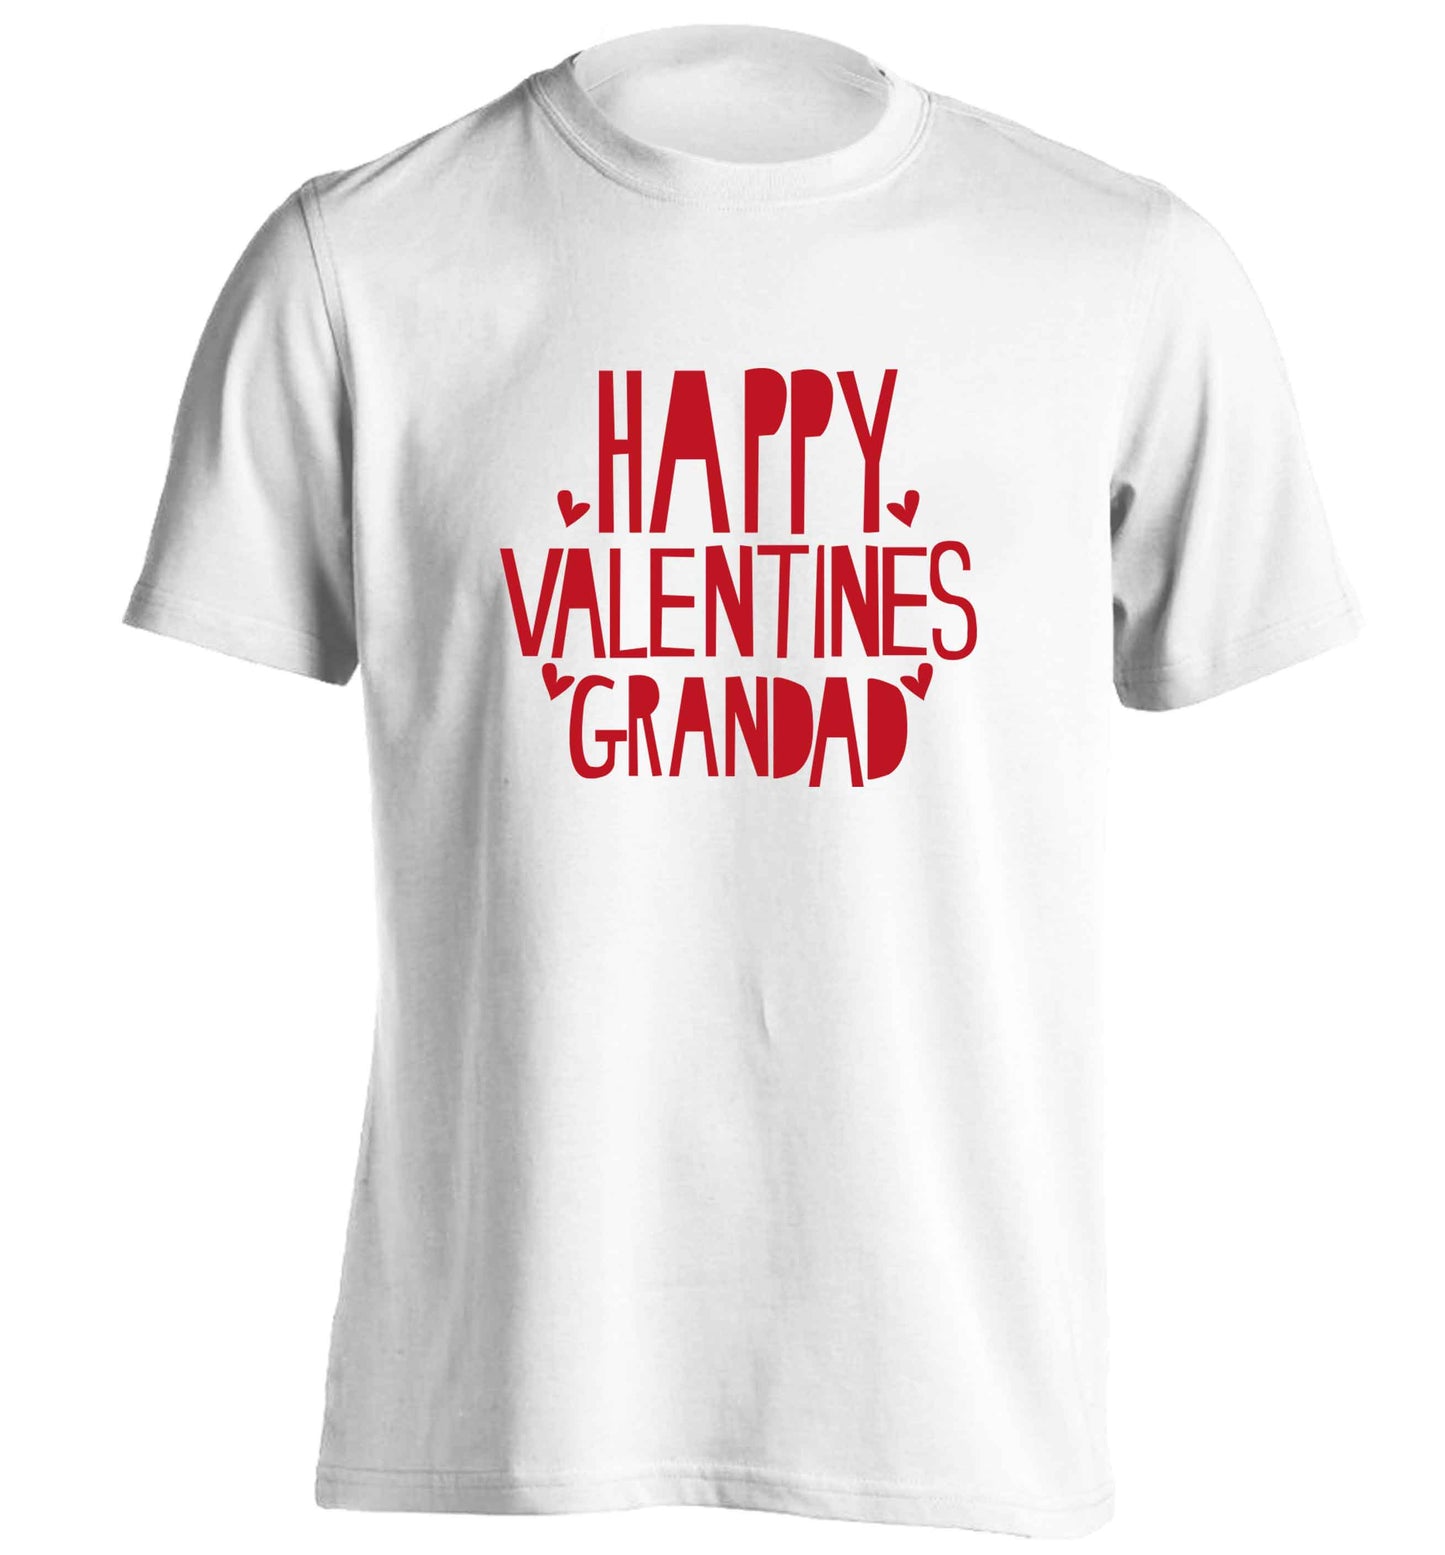 Happy valentines grandad adults unisex white Tshirt 2XL